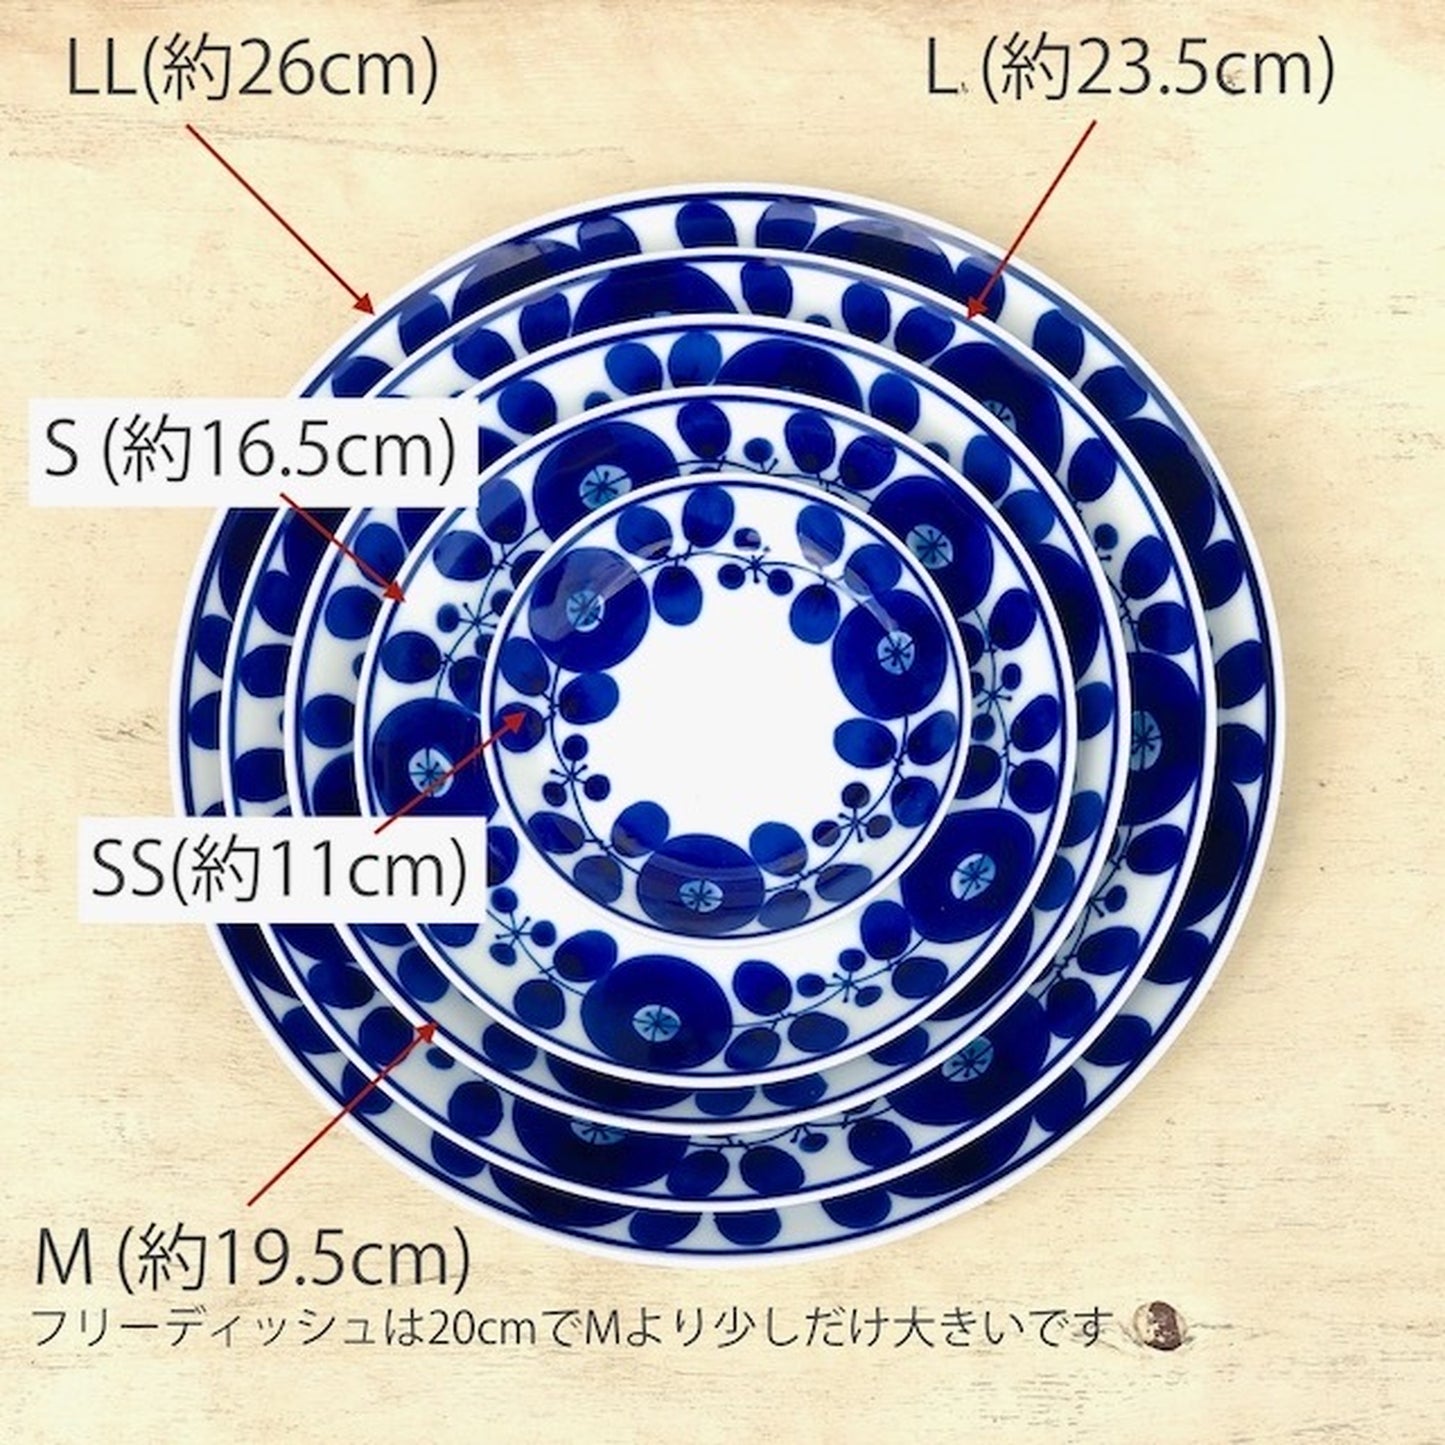 [Hasami ware] [Hakusan pottery] [Bloom] [Plate] [Wreath] [S] [Sold 单独出售] 斯堪的纳维亚风格餐具盘子时尚可爱